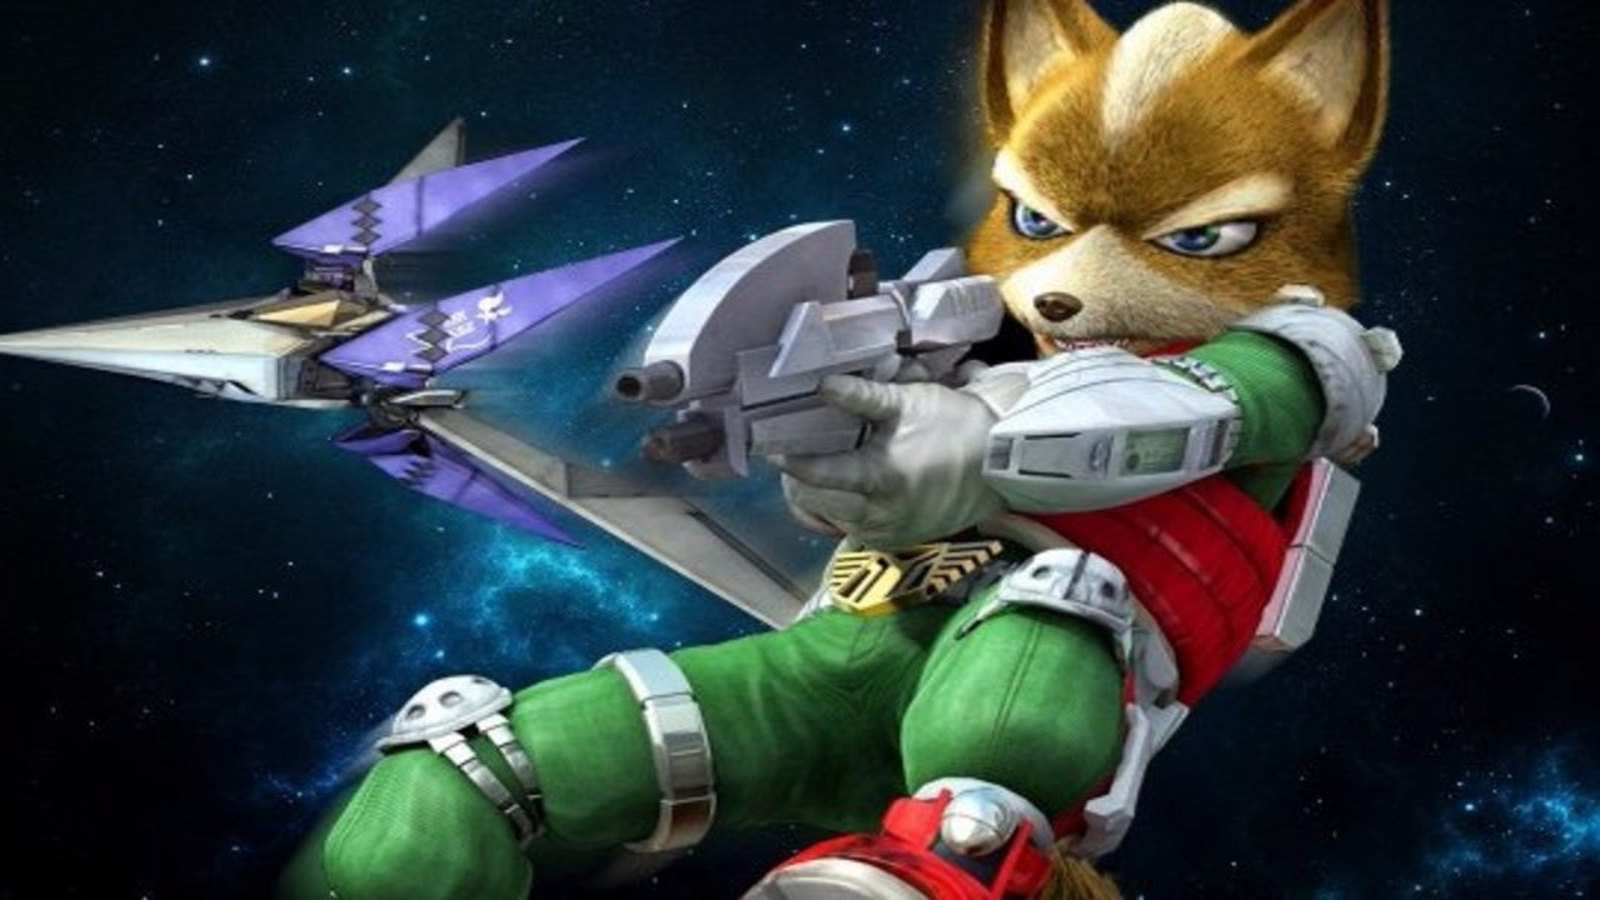 Star Fox Zero - Gameplay Walkthrough Part 1 - Intro and Corneria